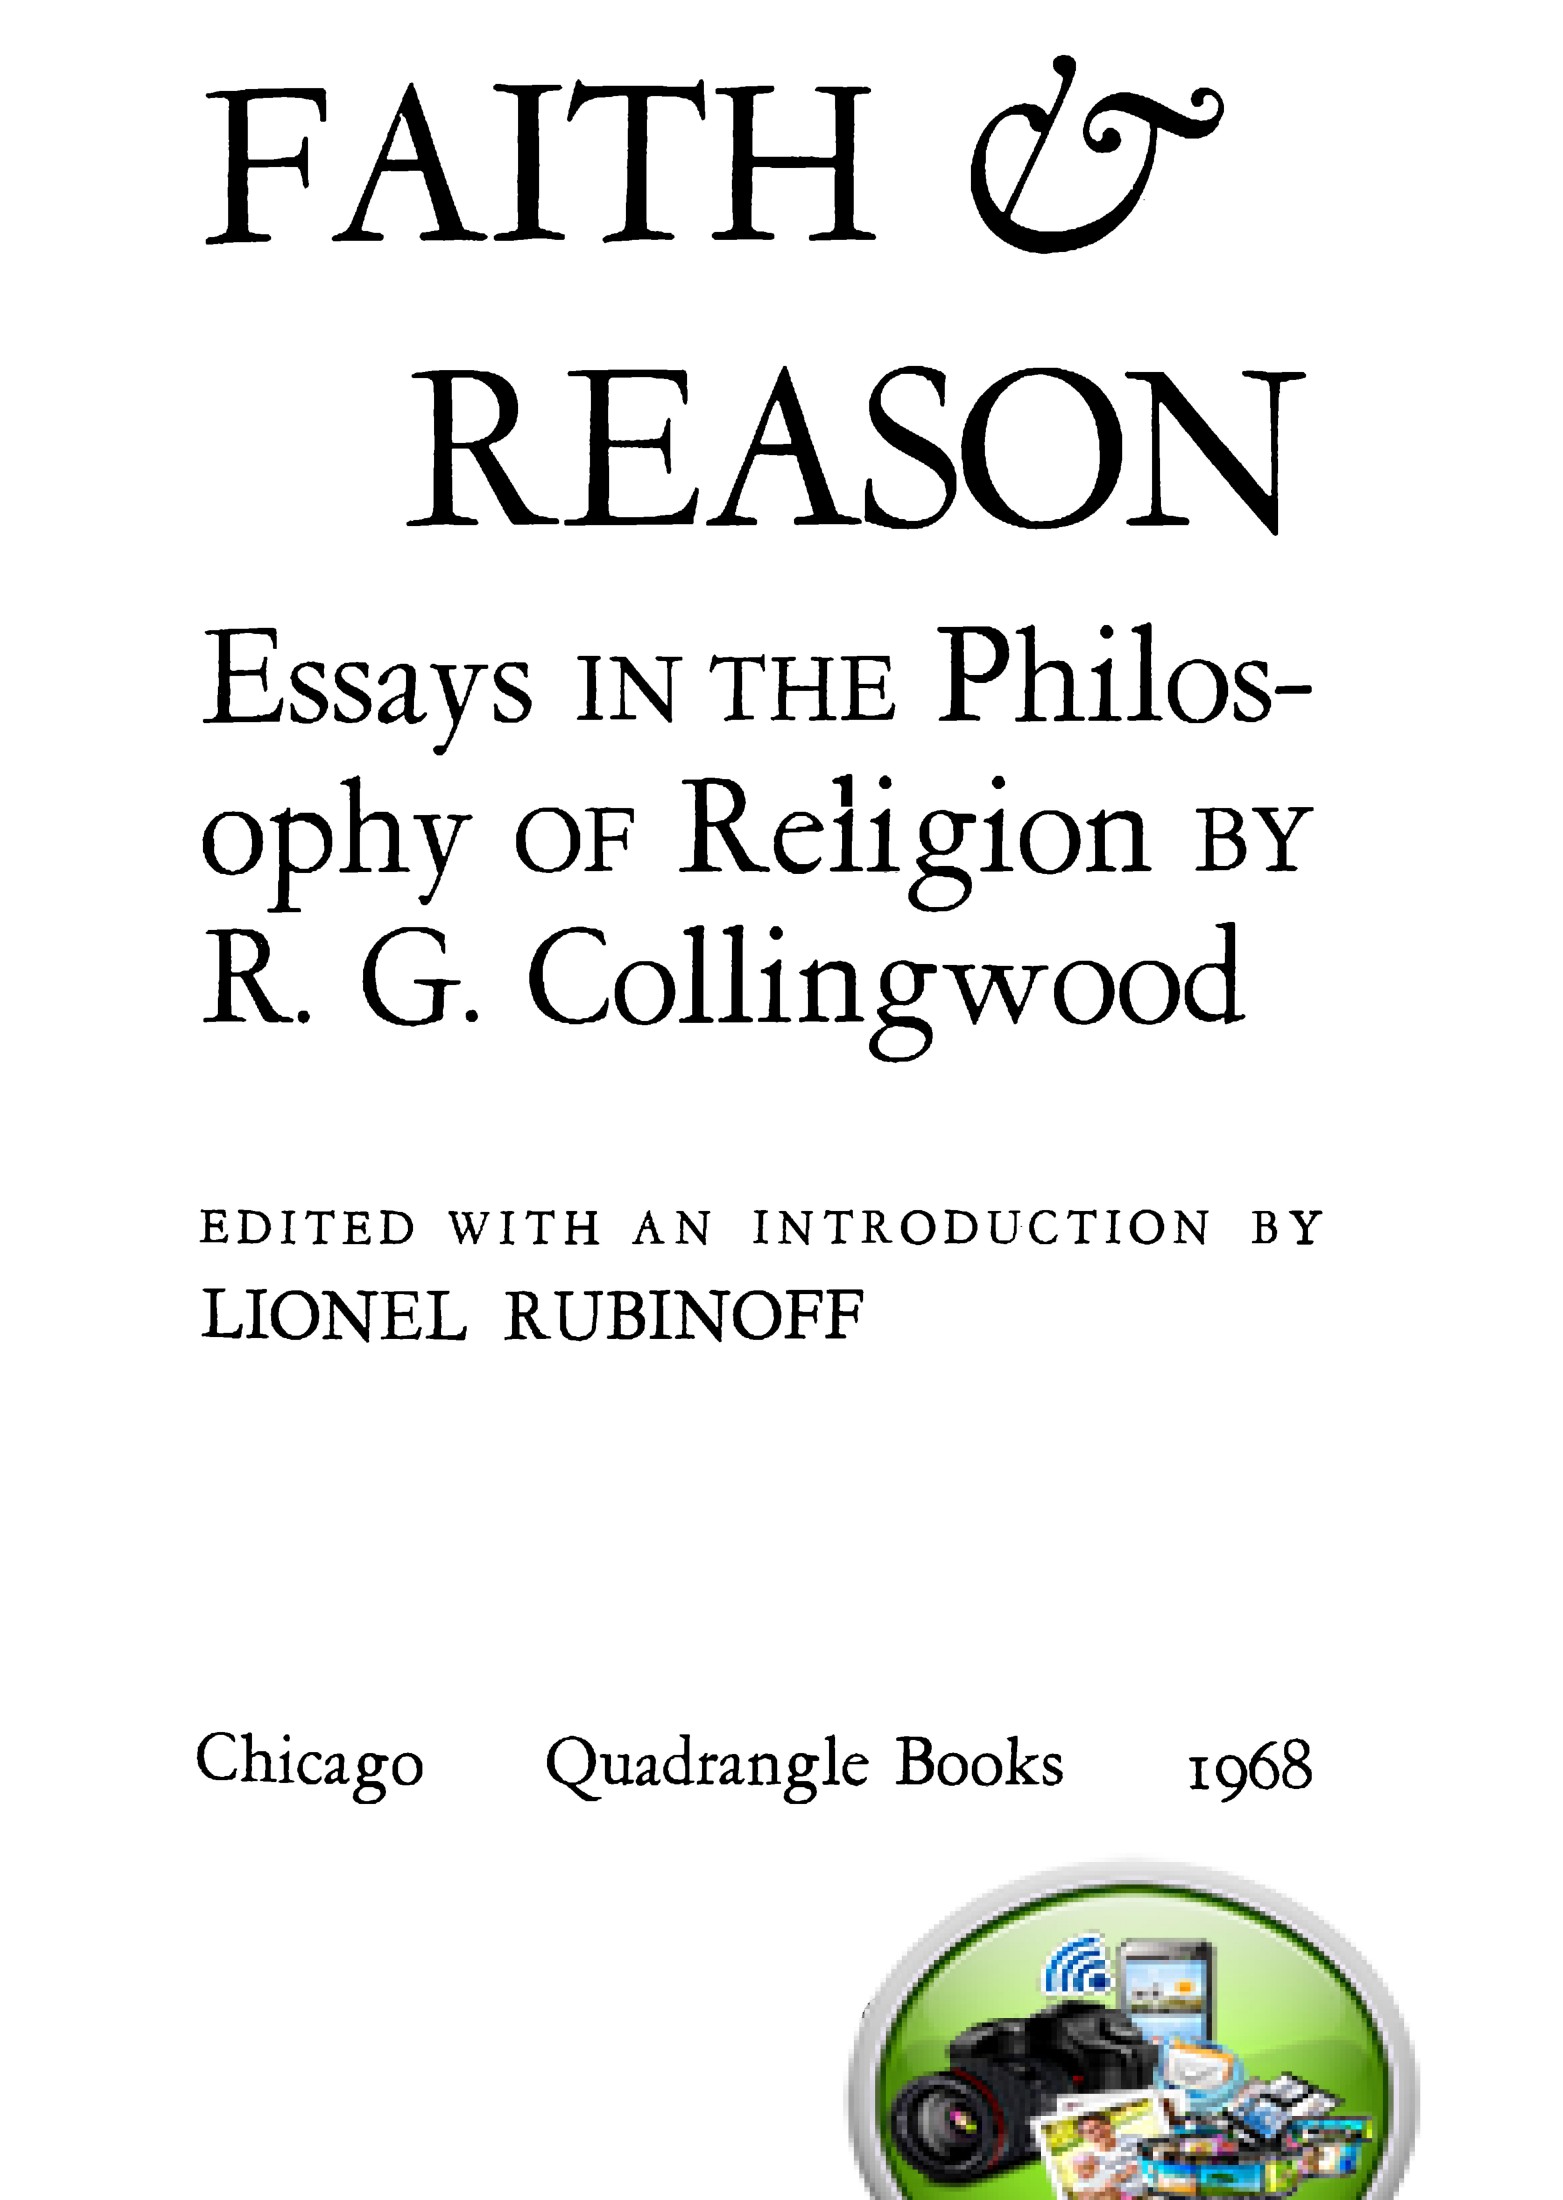 Faith & Reason: Essays in the Philosophy of Religion